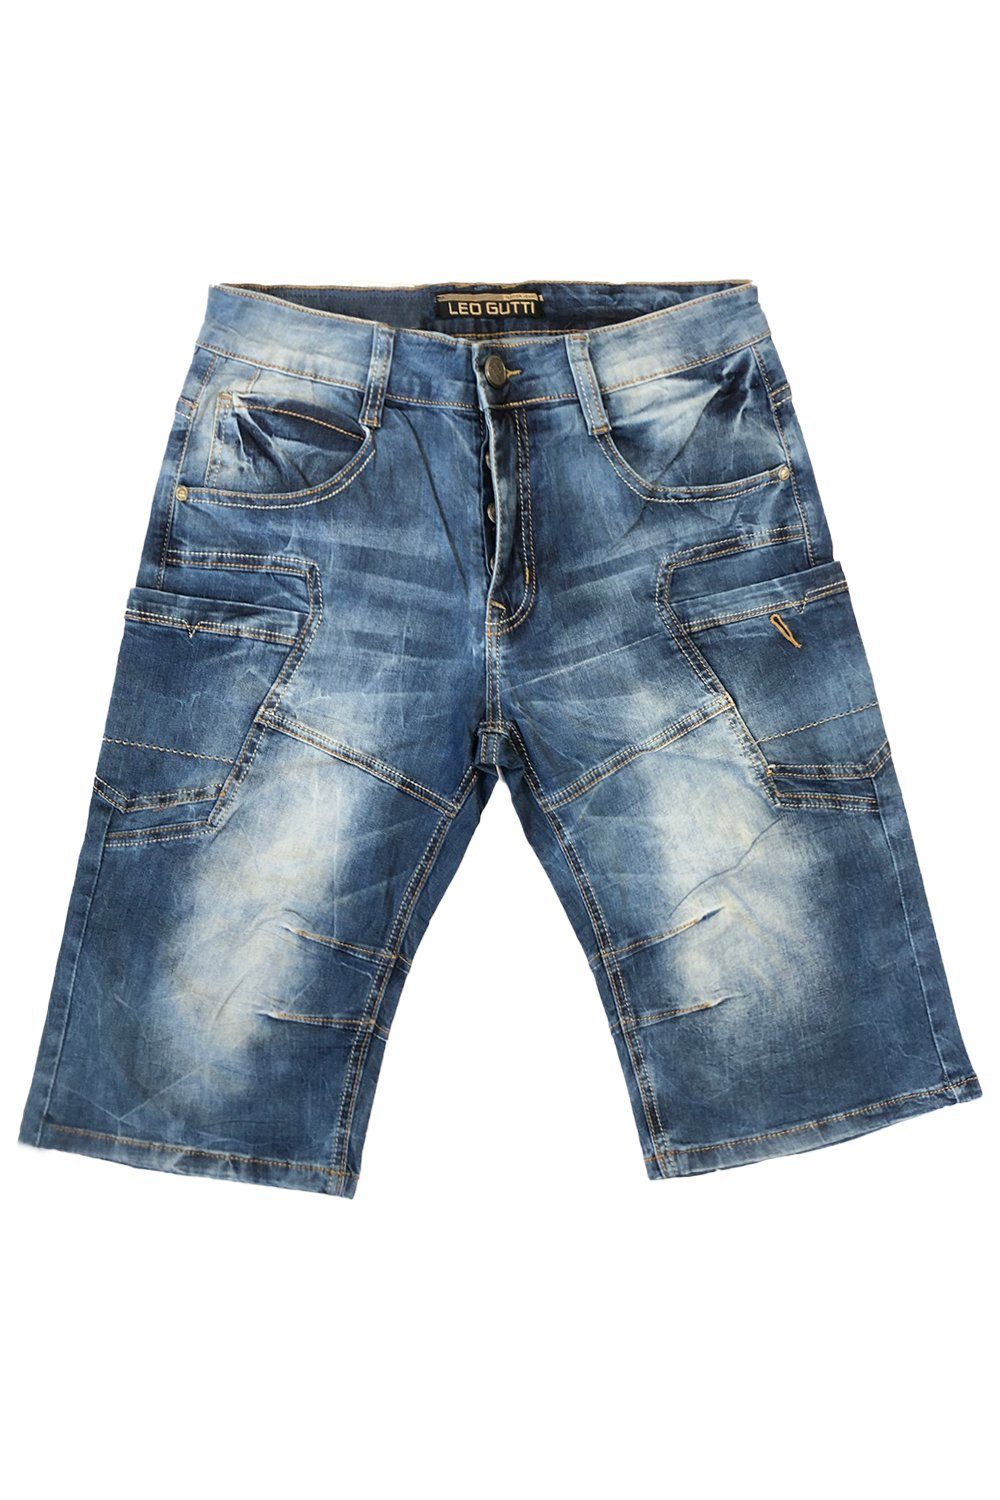 LEO GUTTI Jeansshorts »Herren Capri Jeans Shorts Sommer Kurze 3/4 Slim Hose  Denim Cargo Pants« (1-tlg) 3648 in Blau online kaufen | OTTO